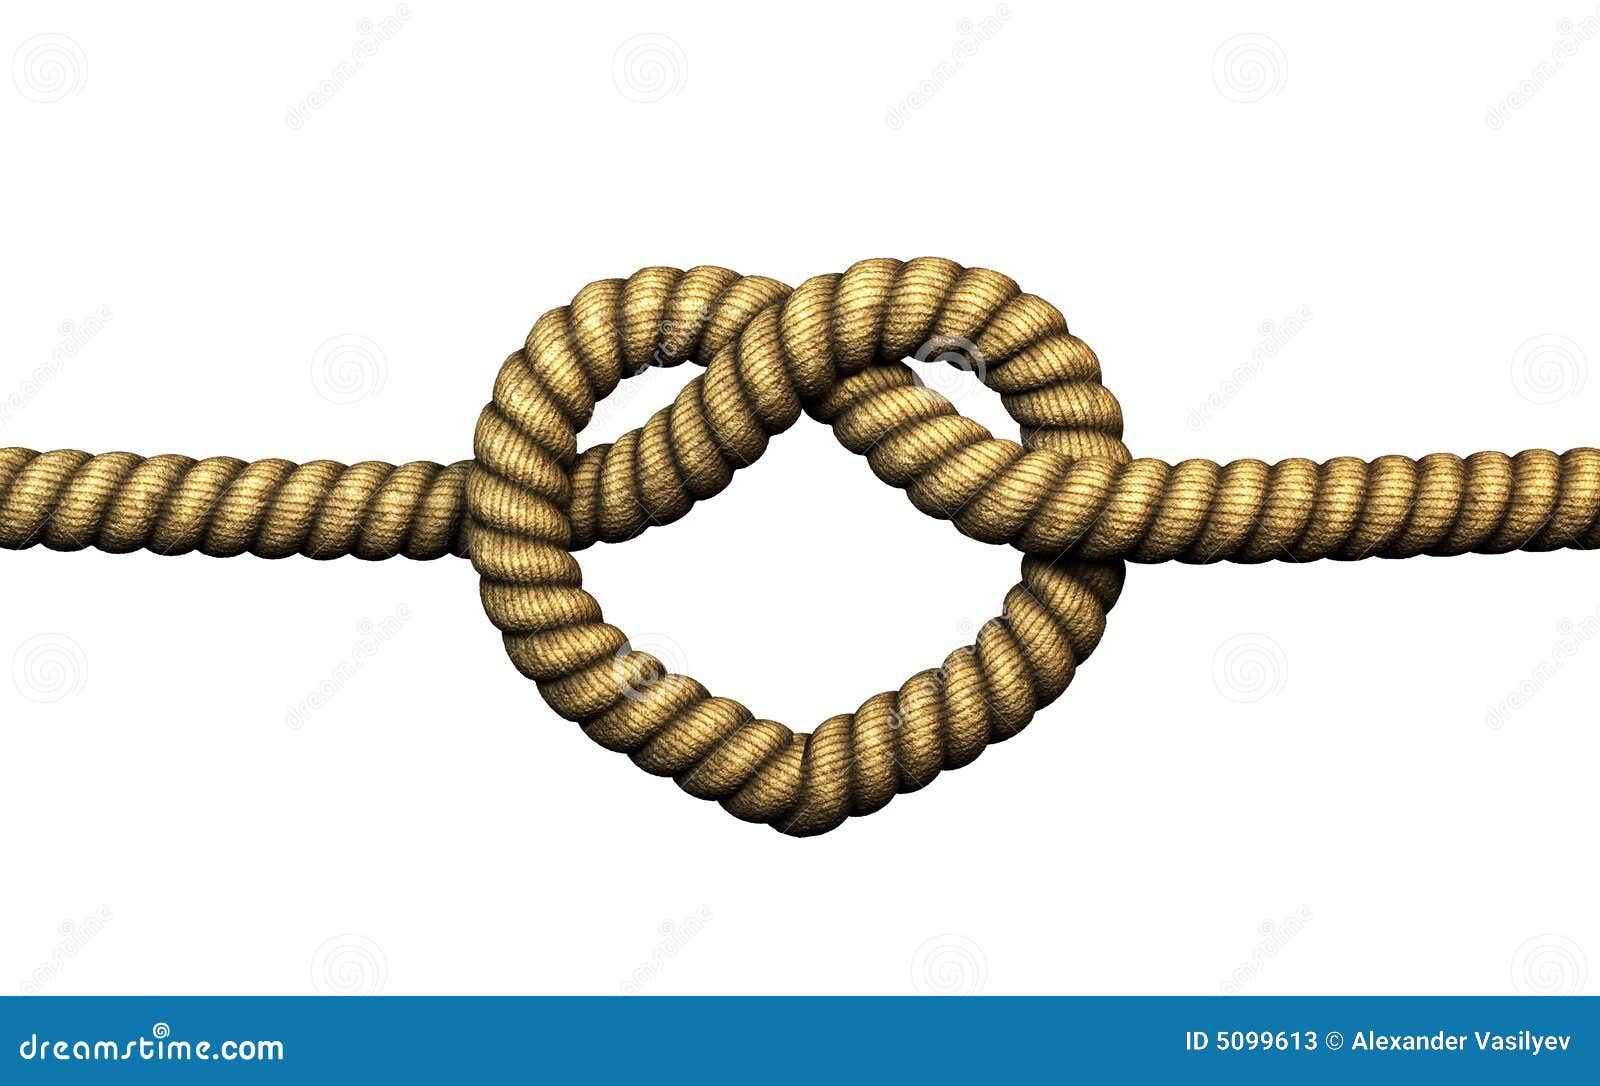 Love knot stock illustration. Illustration of white, hanging - 5099613